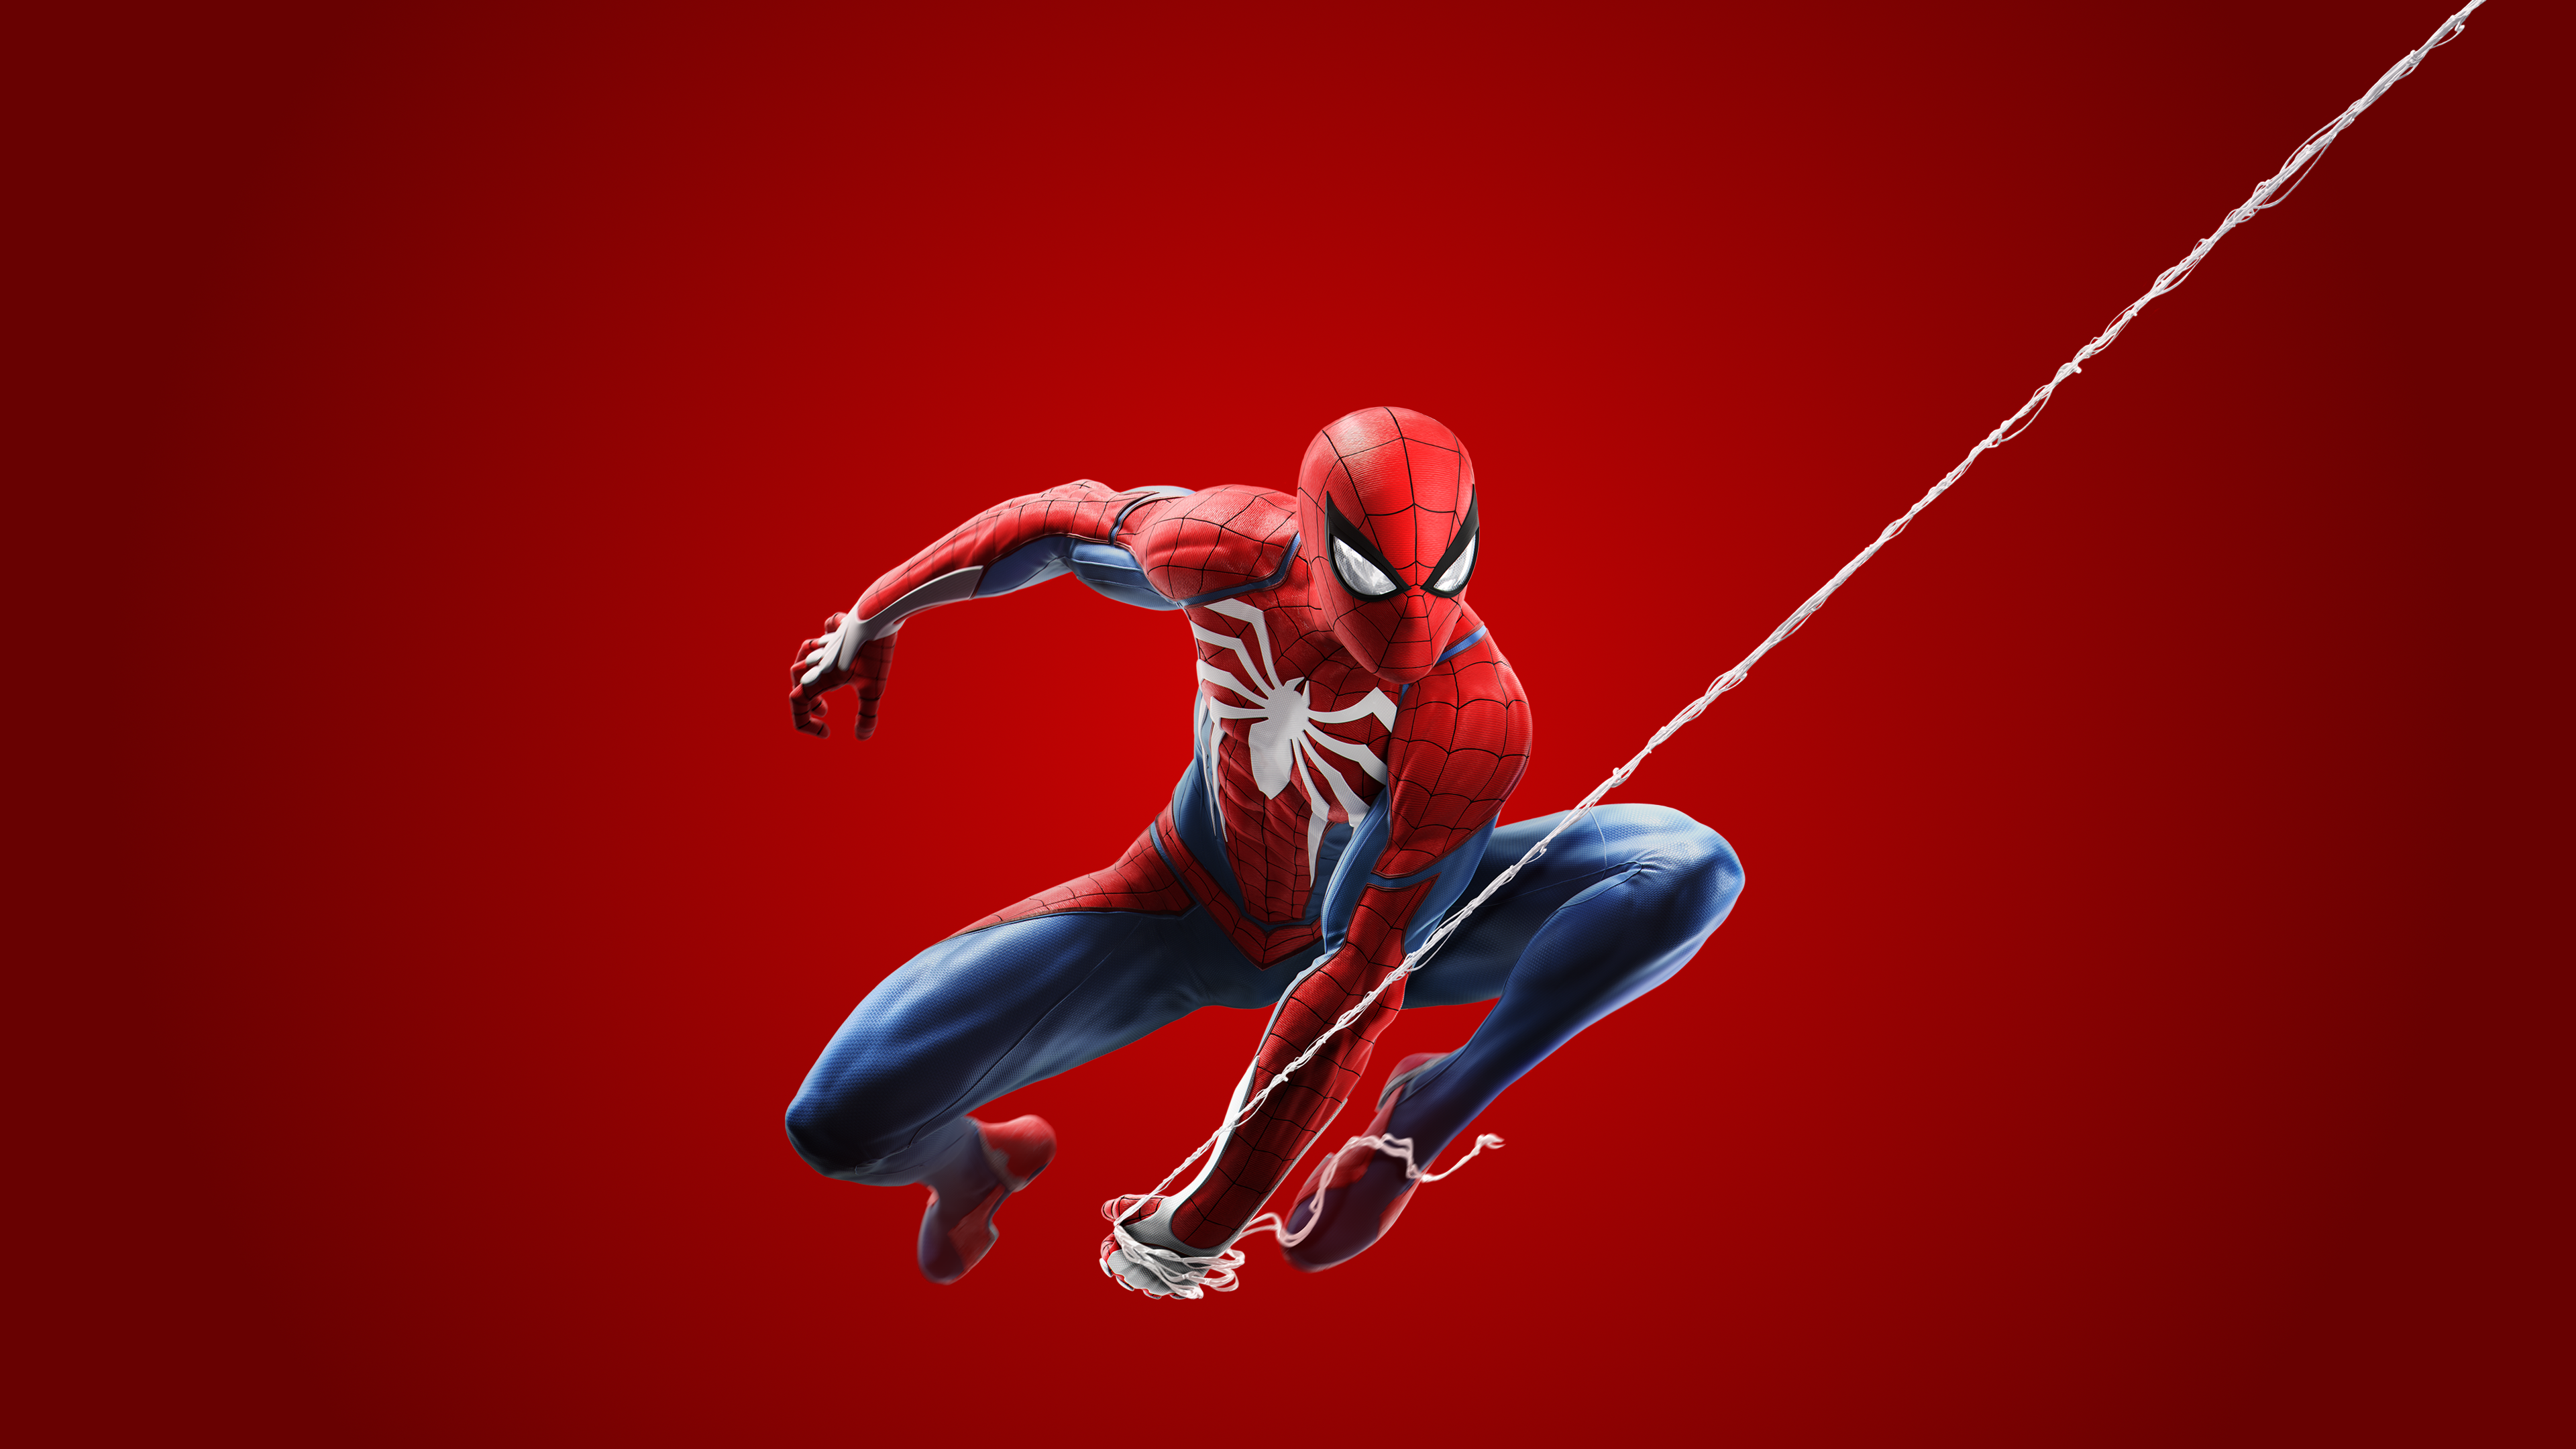 wallpapers de spiderman,spider man,superhero,fictional character,extreme sport